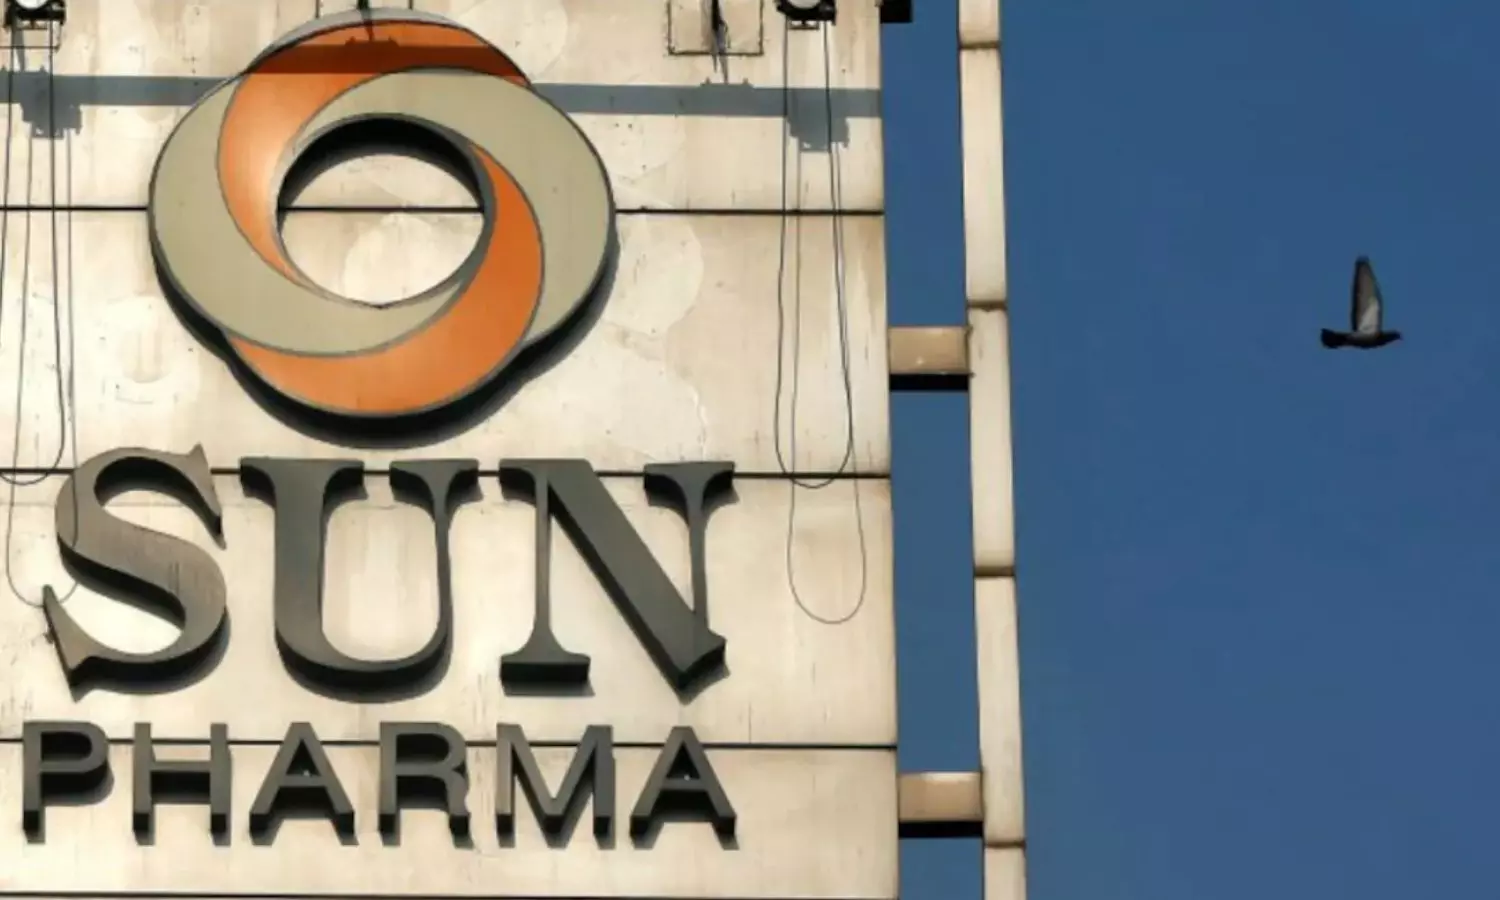 Sun Pharma to buy Concert Pharma for Rs 4678 crore